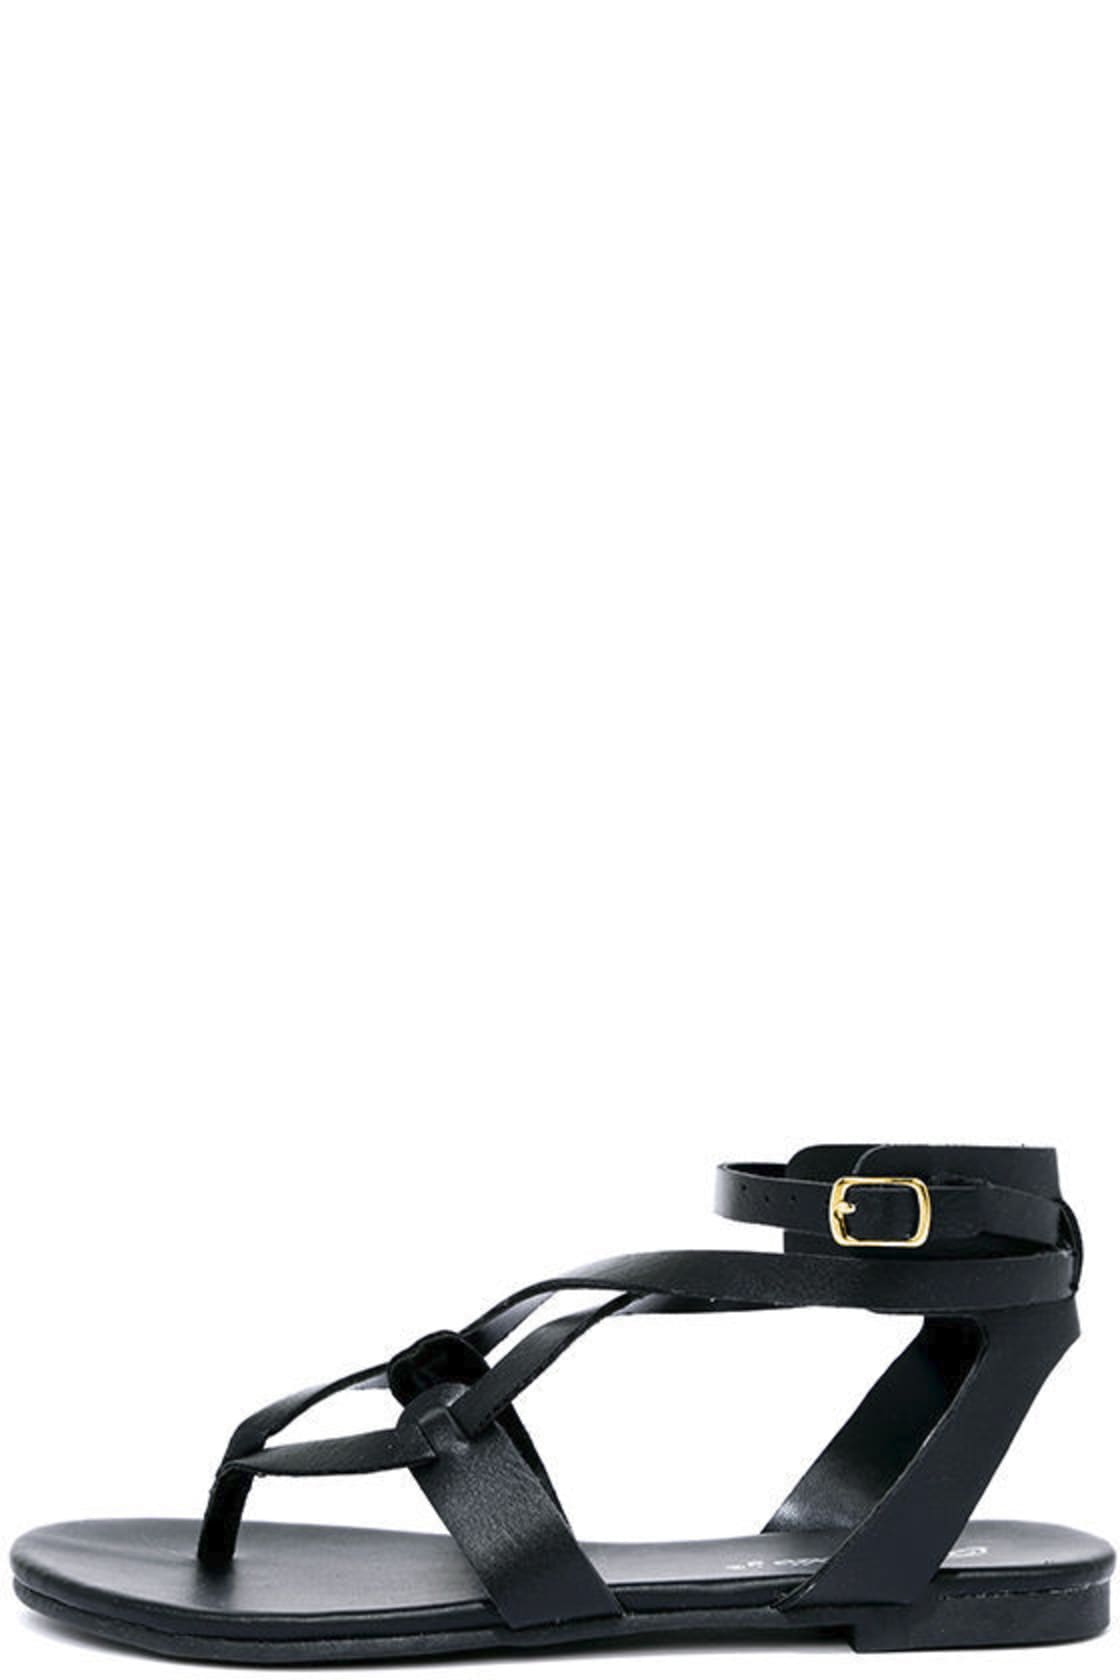 Cool Black Sandals - Thong Sandals - Gladiator Sandals - $19.00 - Lulus